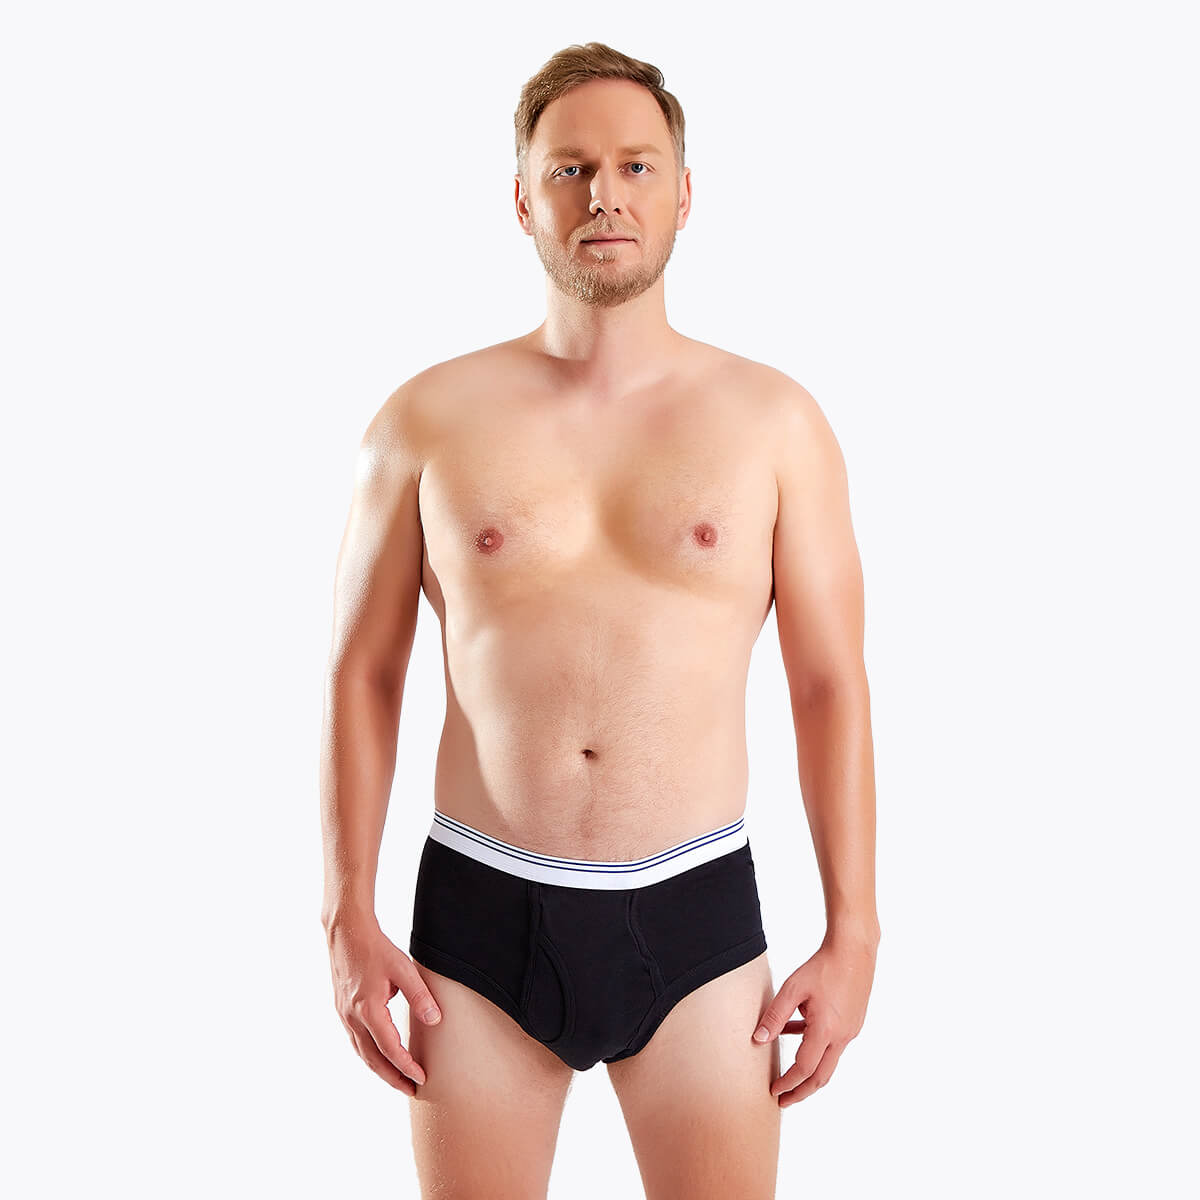 Men's Washable Incontinence Underwear, Absorbent Brief, 1 Pair